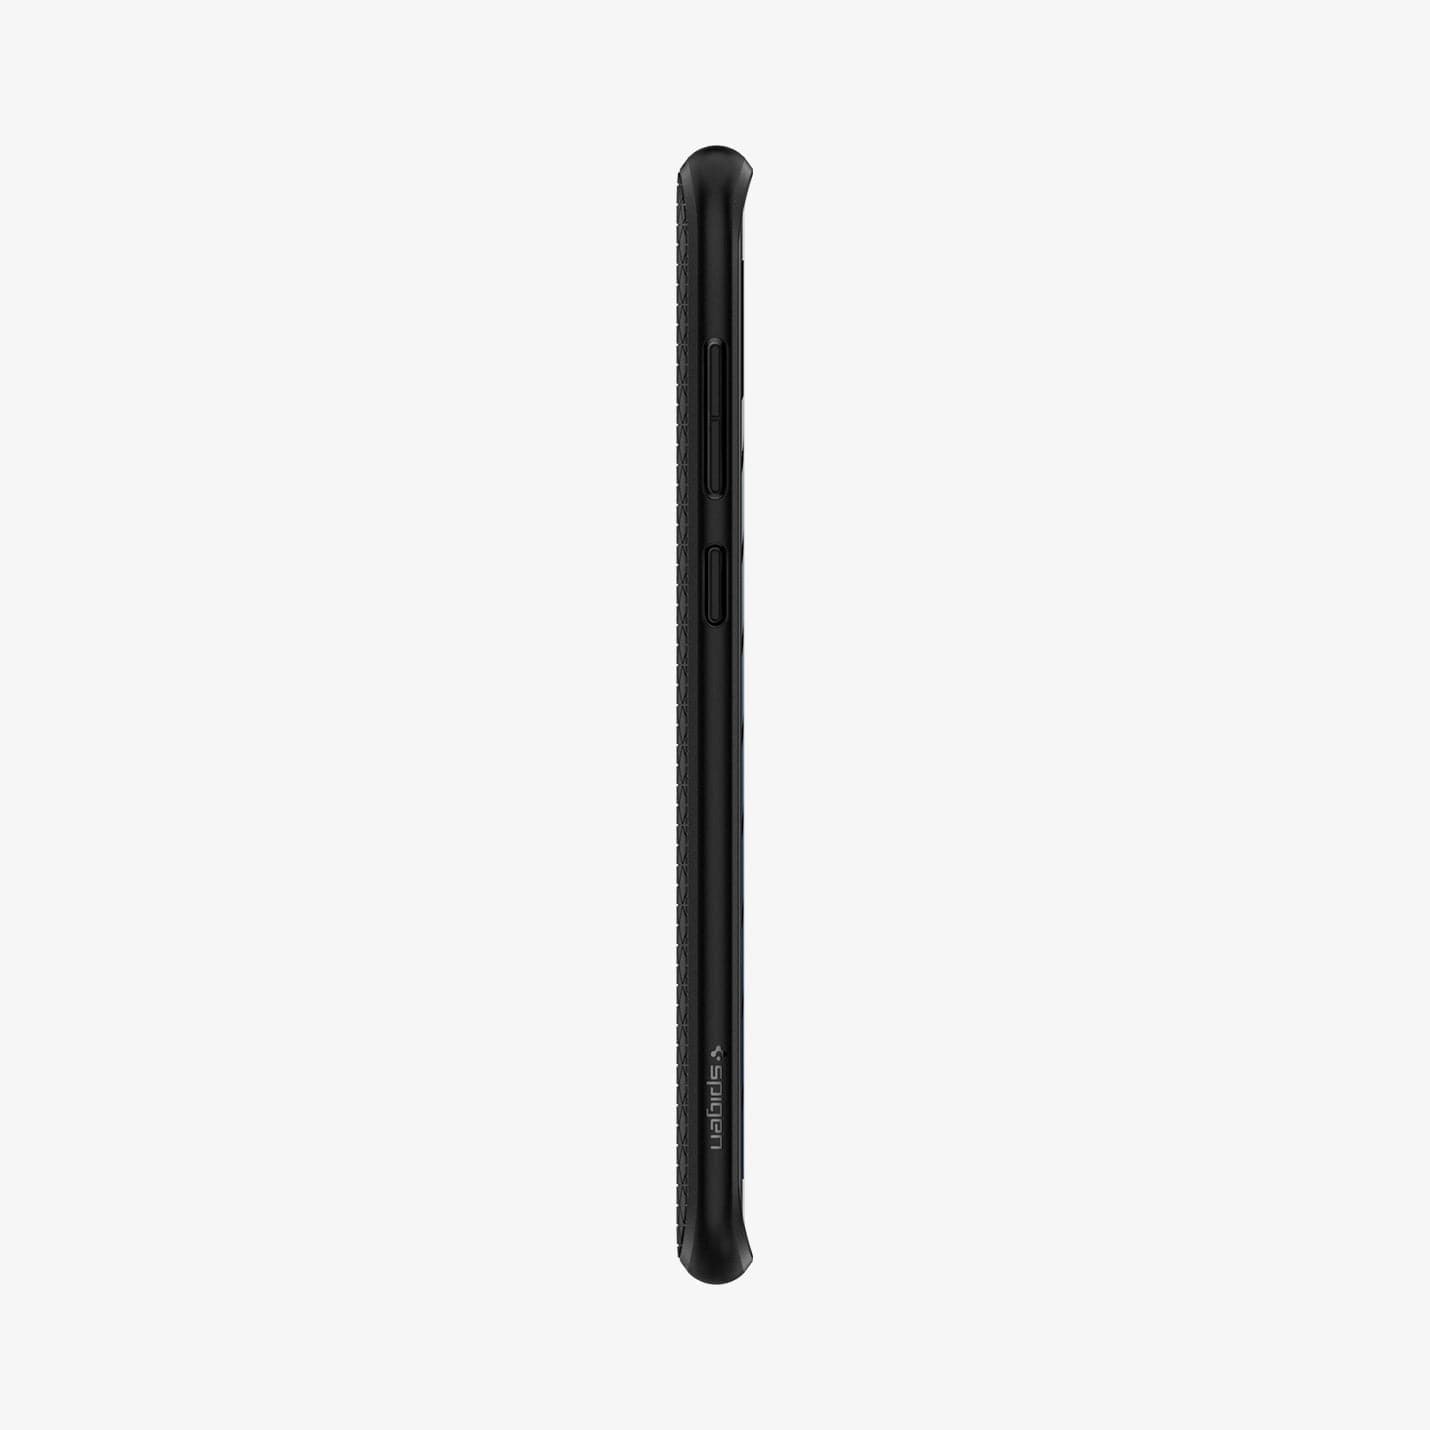 571CS21663 - Galaxy S8 Series Liquid Air Case in black showing the side